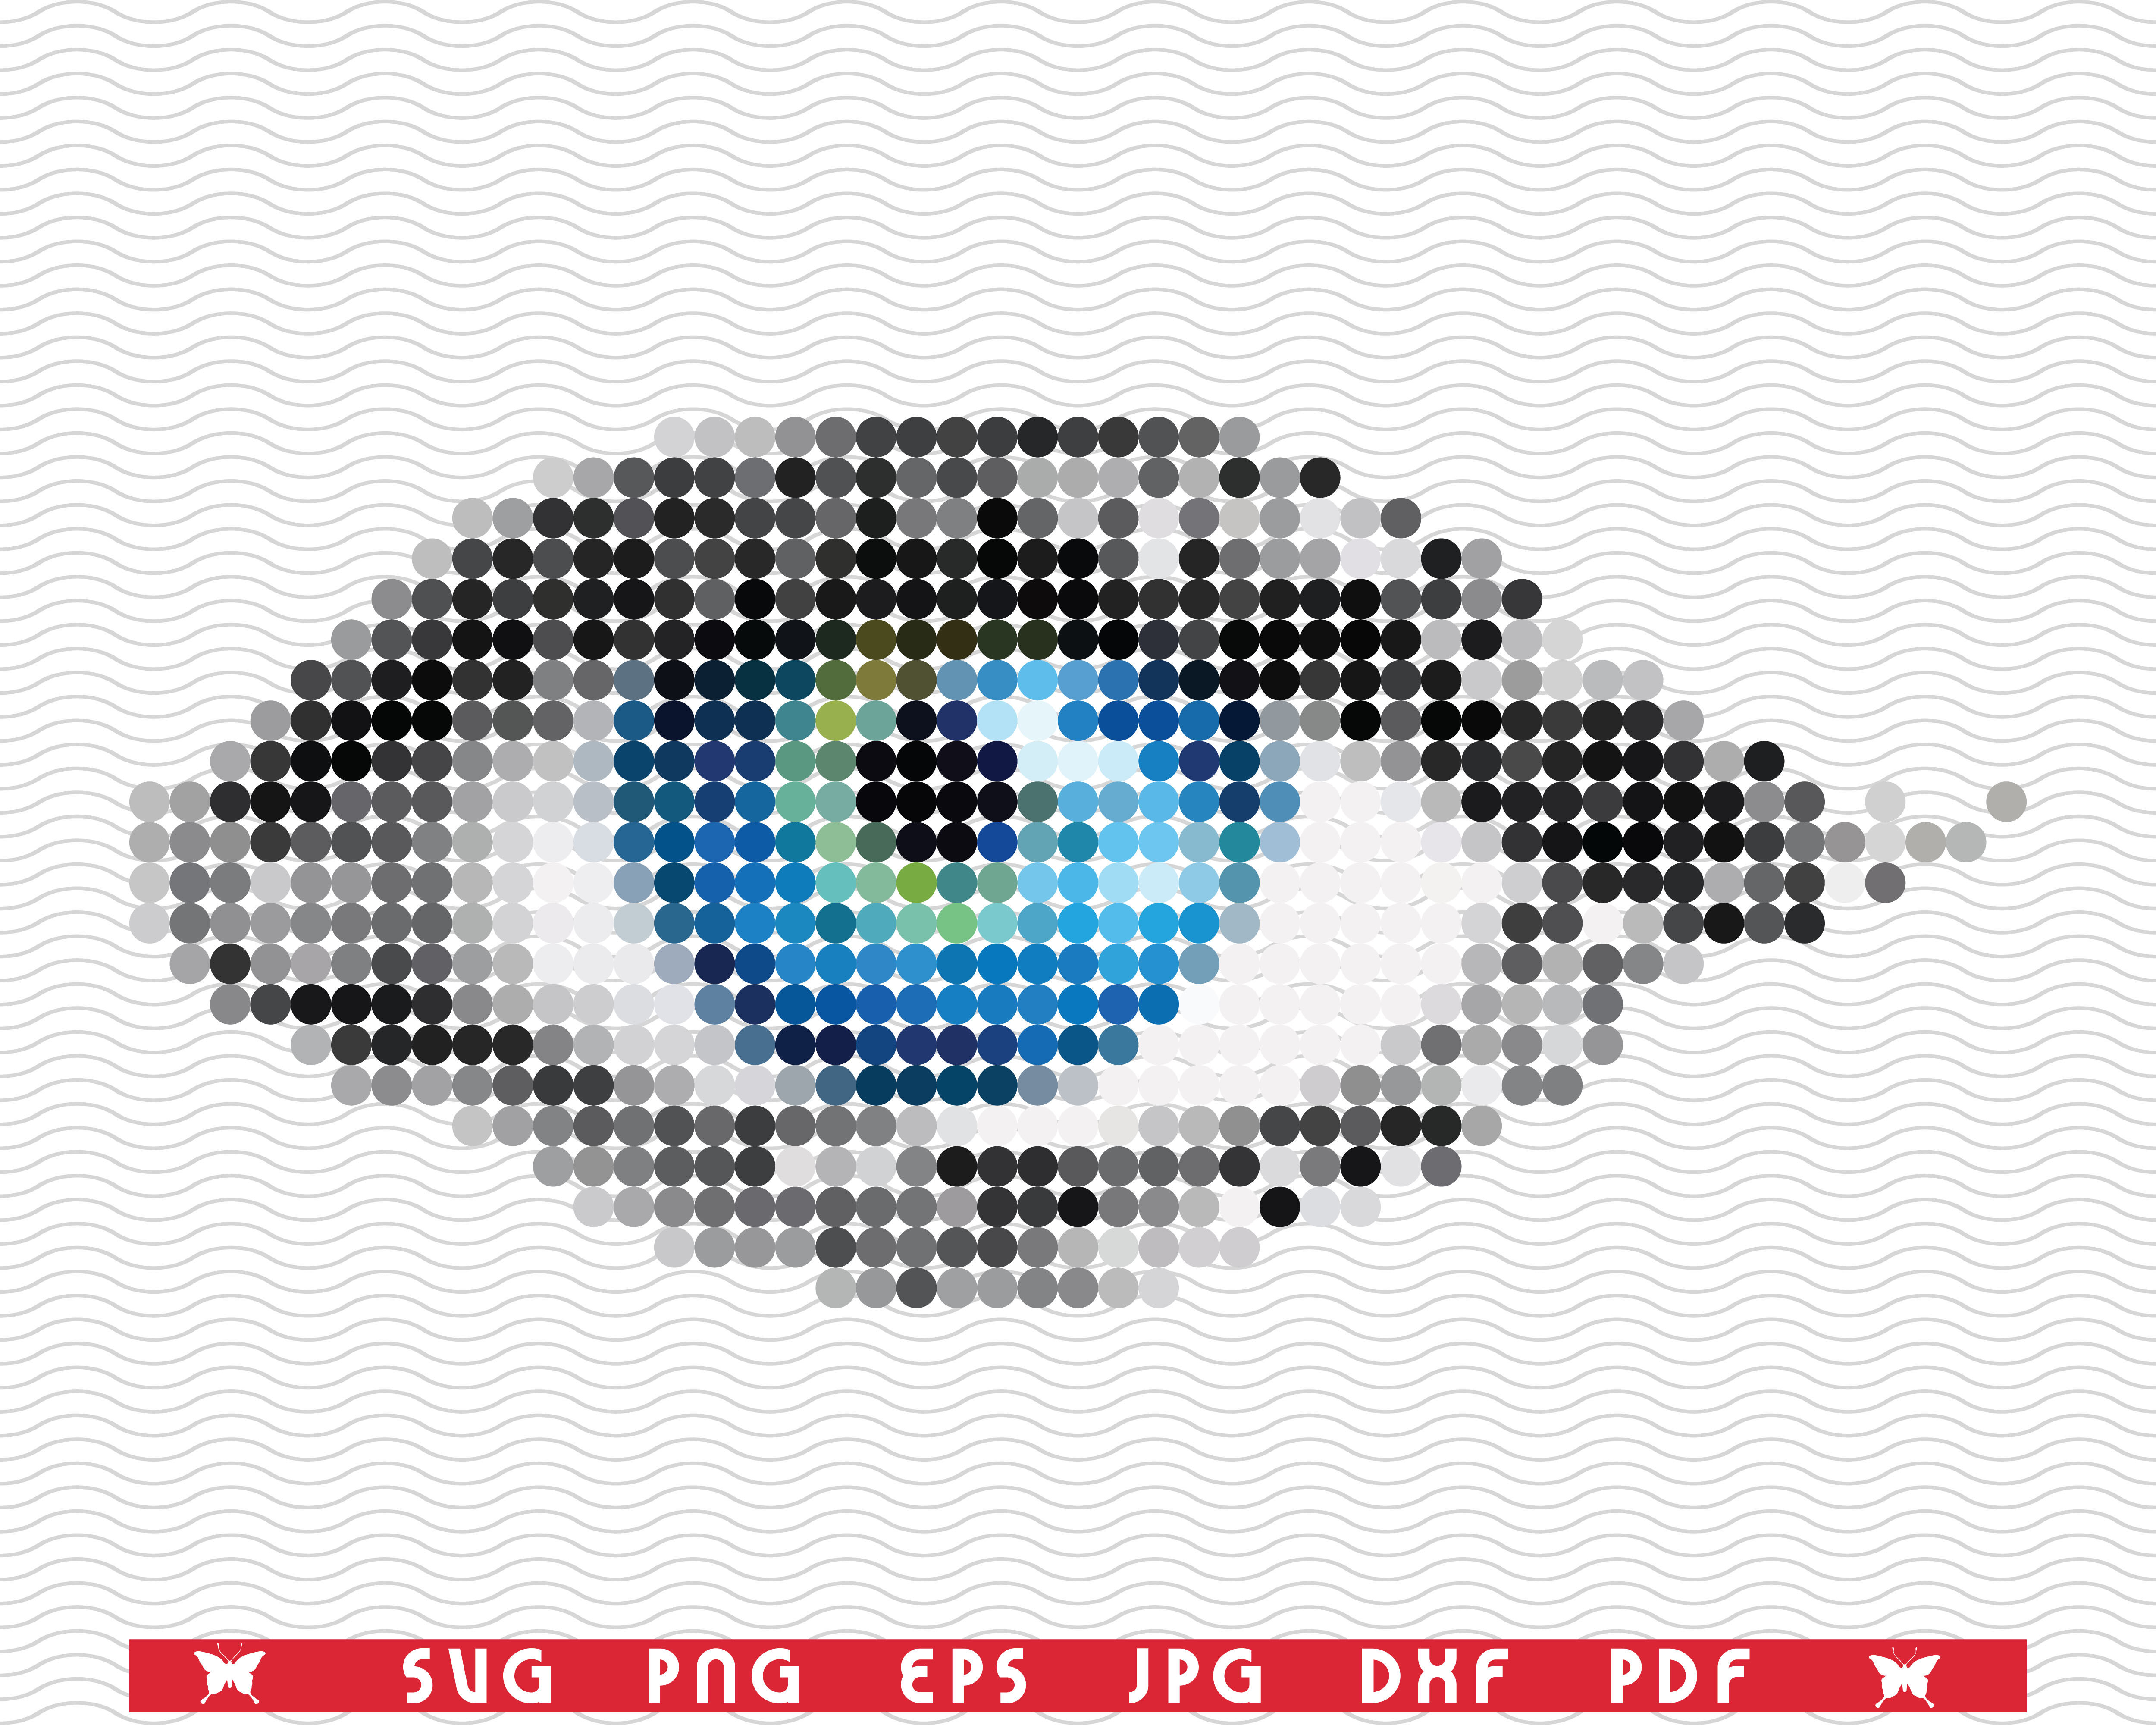 Svg Human Eye Black Silhouette Digital Clipart By Designstudiorm Thehungryjpeg Com